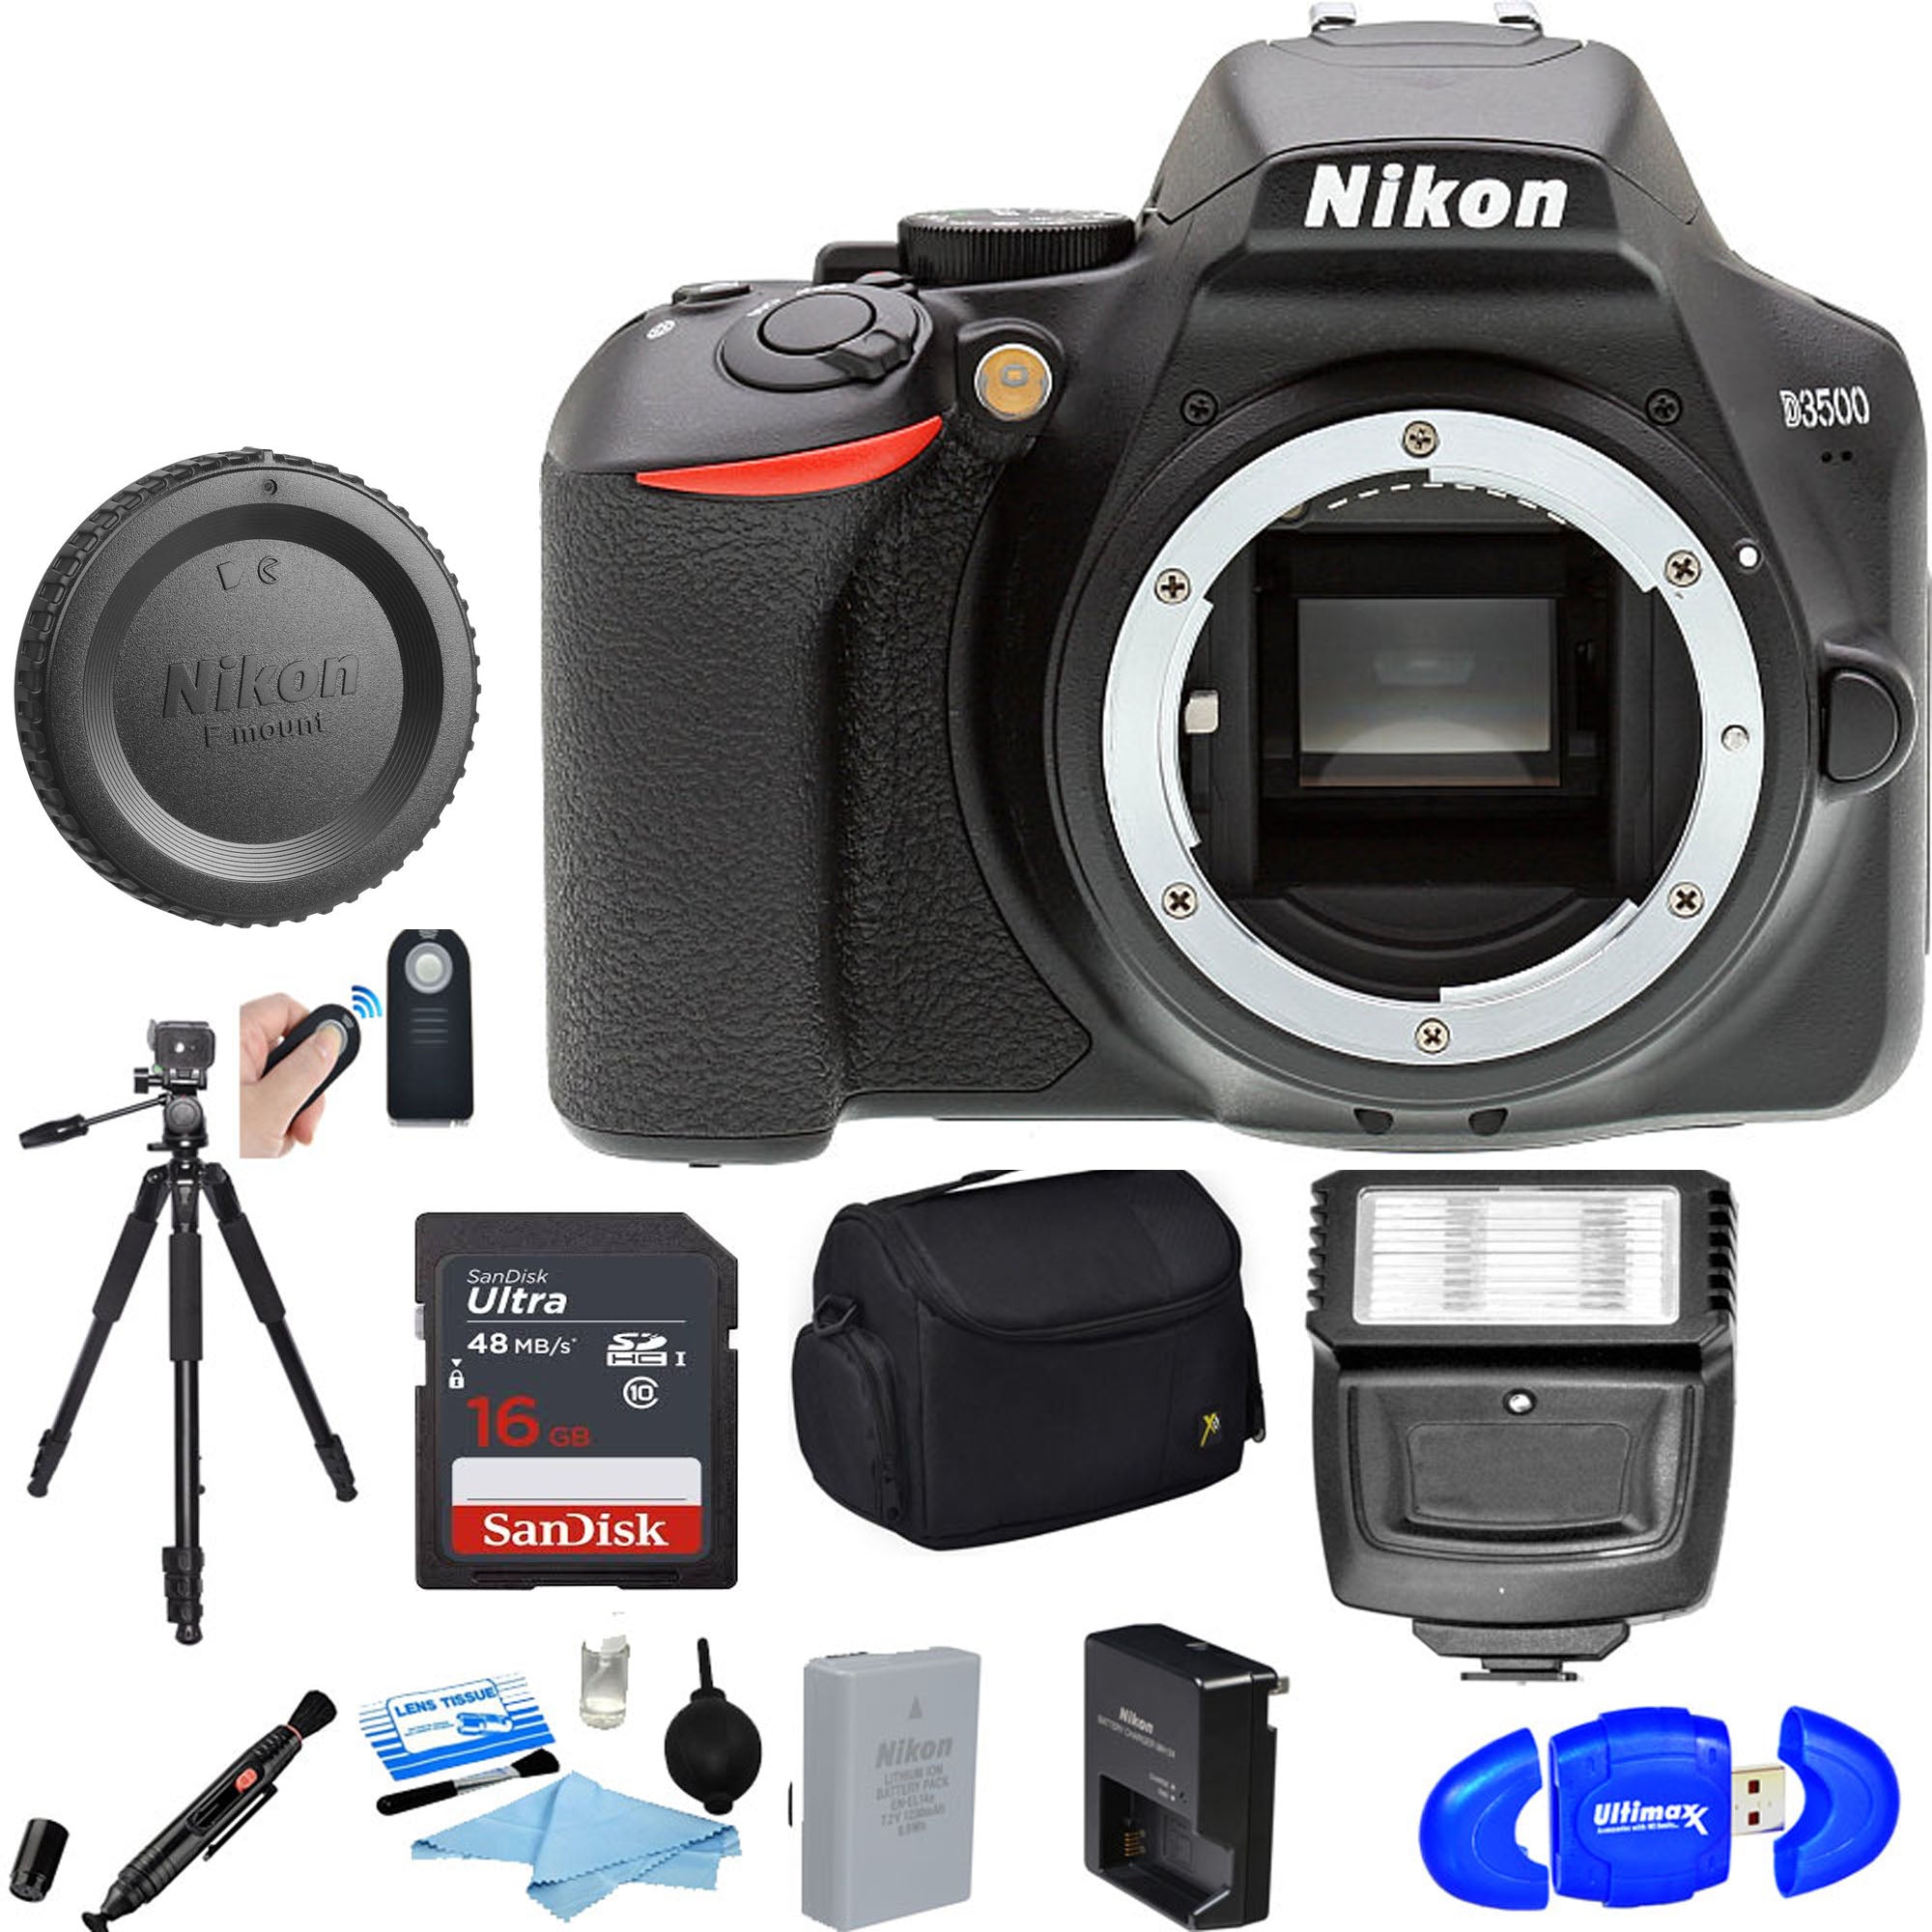 How to Download Nikon D3500 Photos & Videos to a Computer